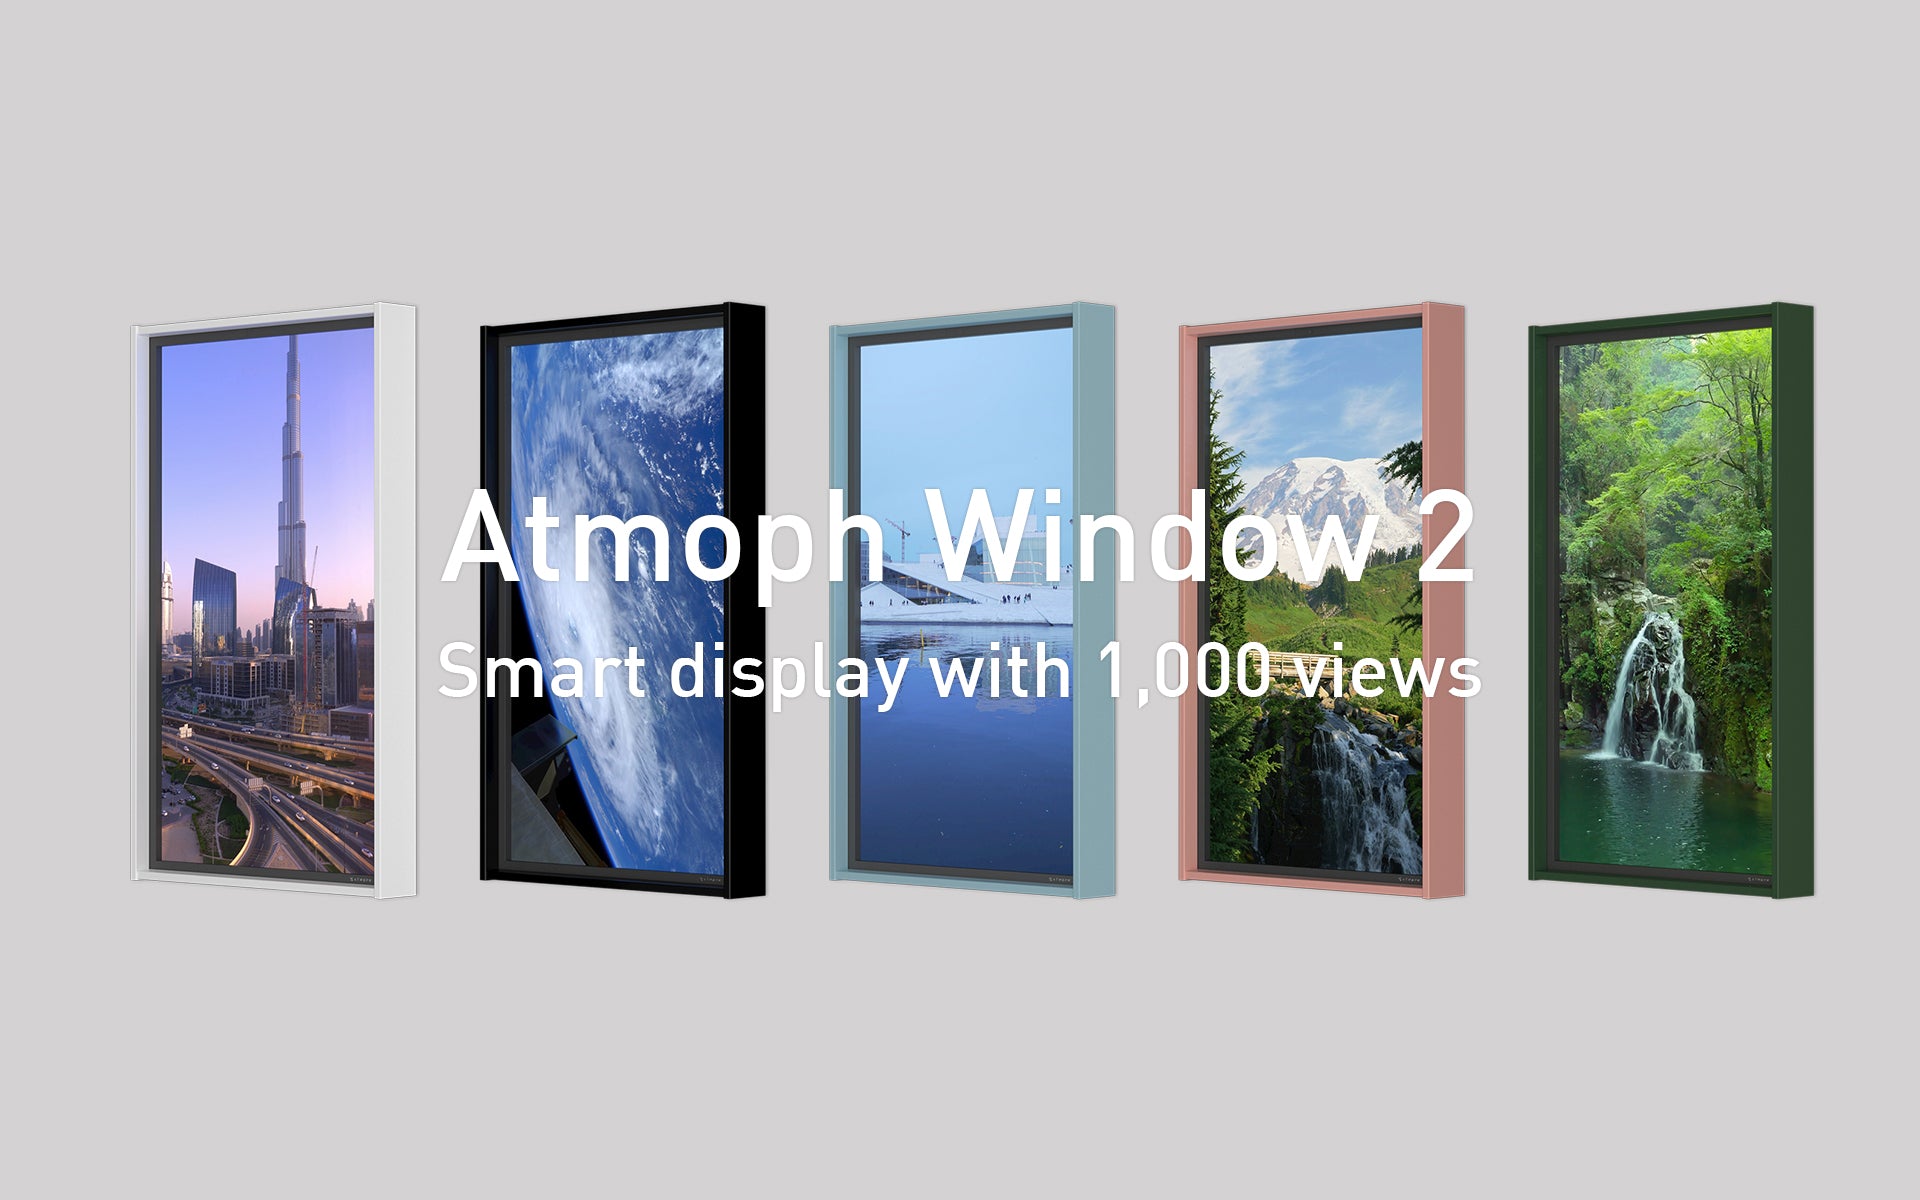 Atmoph Window 2 + オプションLED/Camera/Coupon